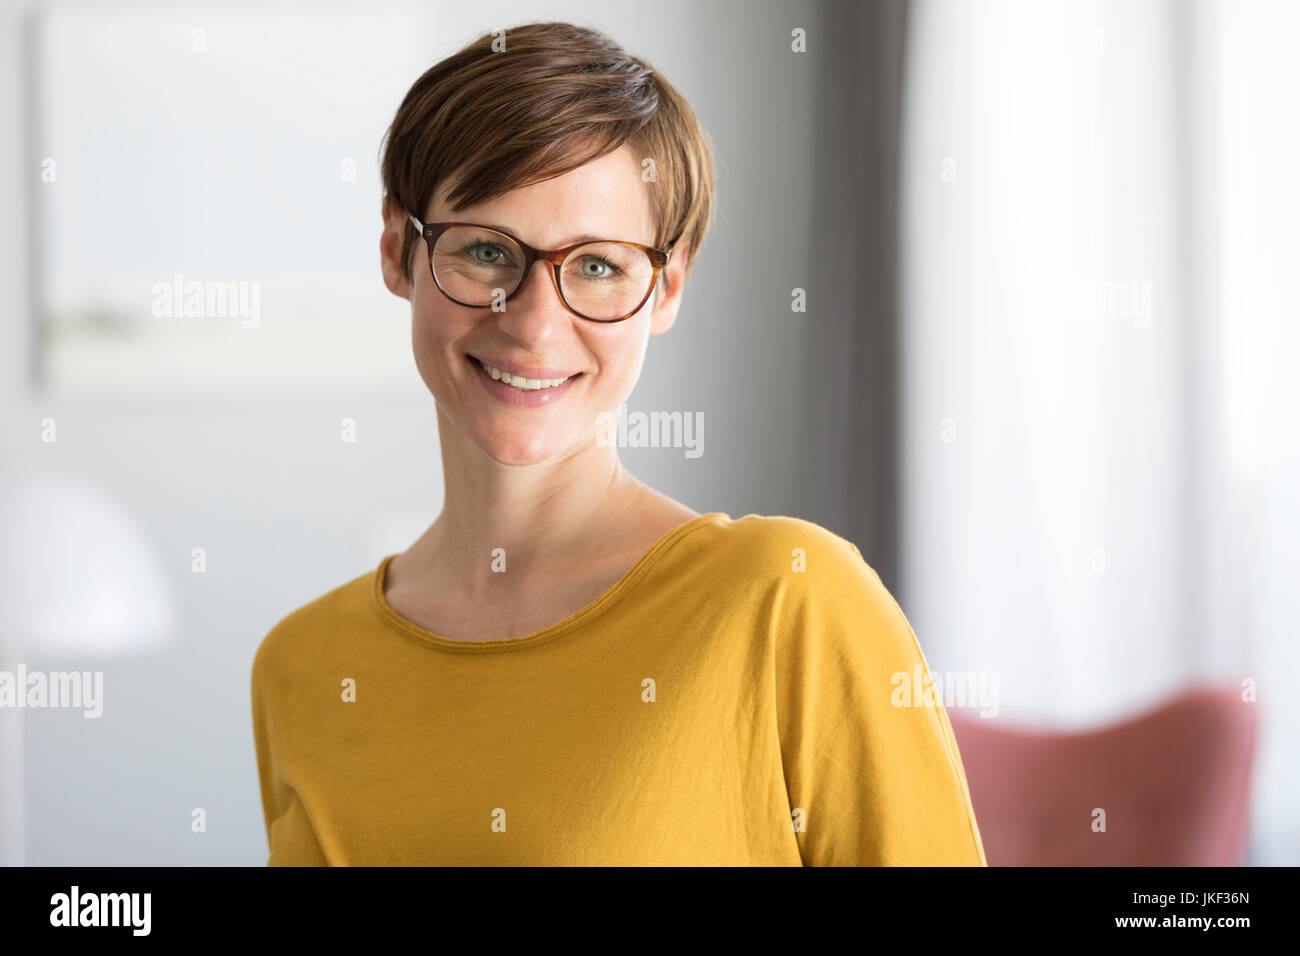 Portrait of smiling woman wearing glasses Banque D'Images